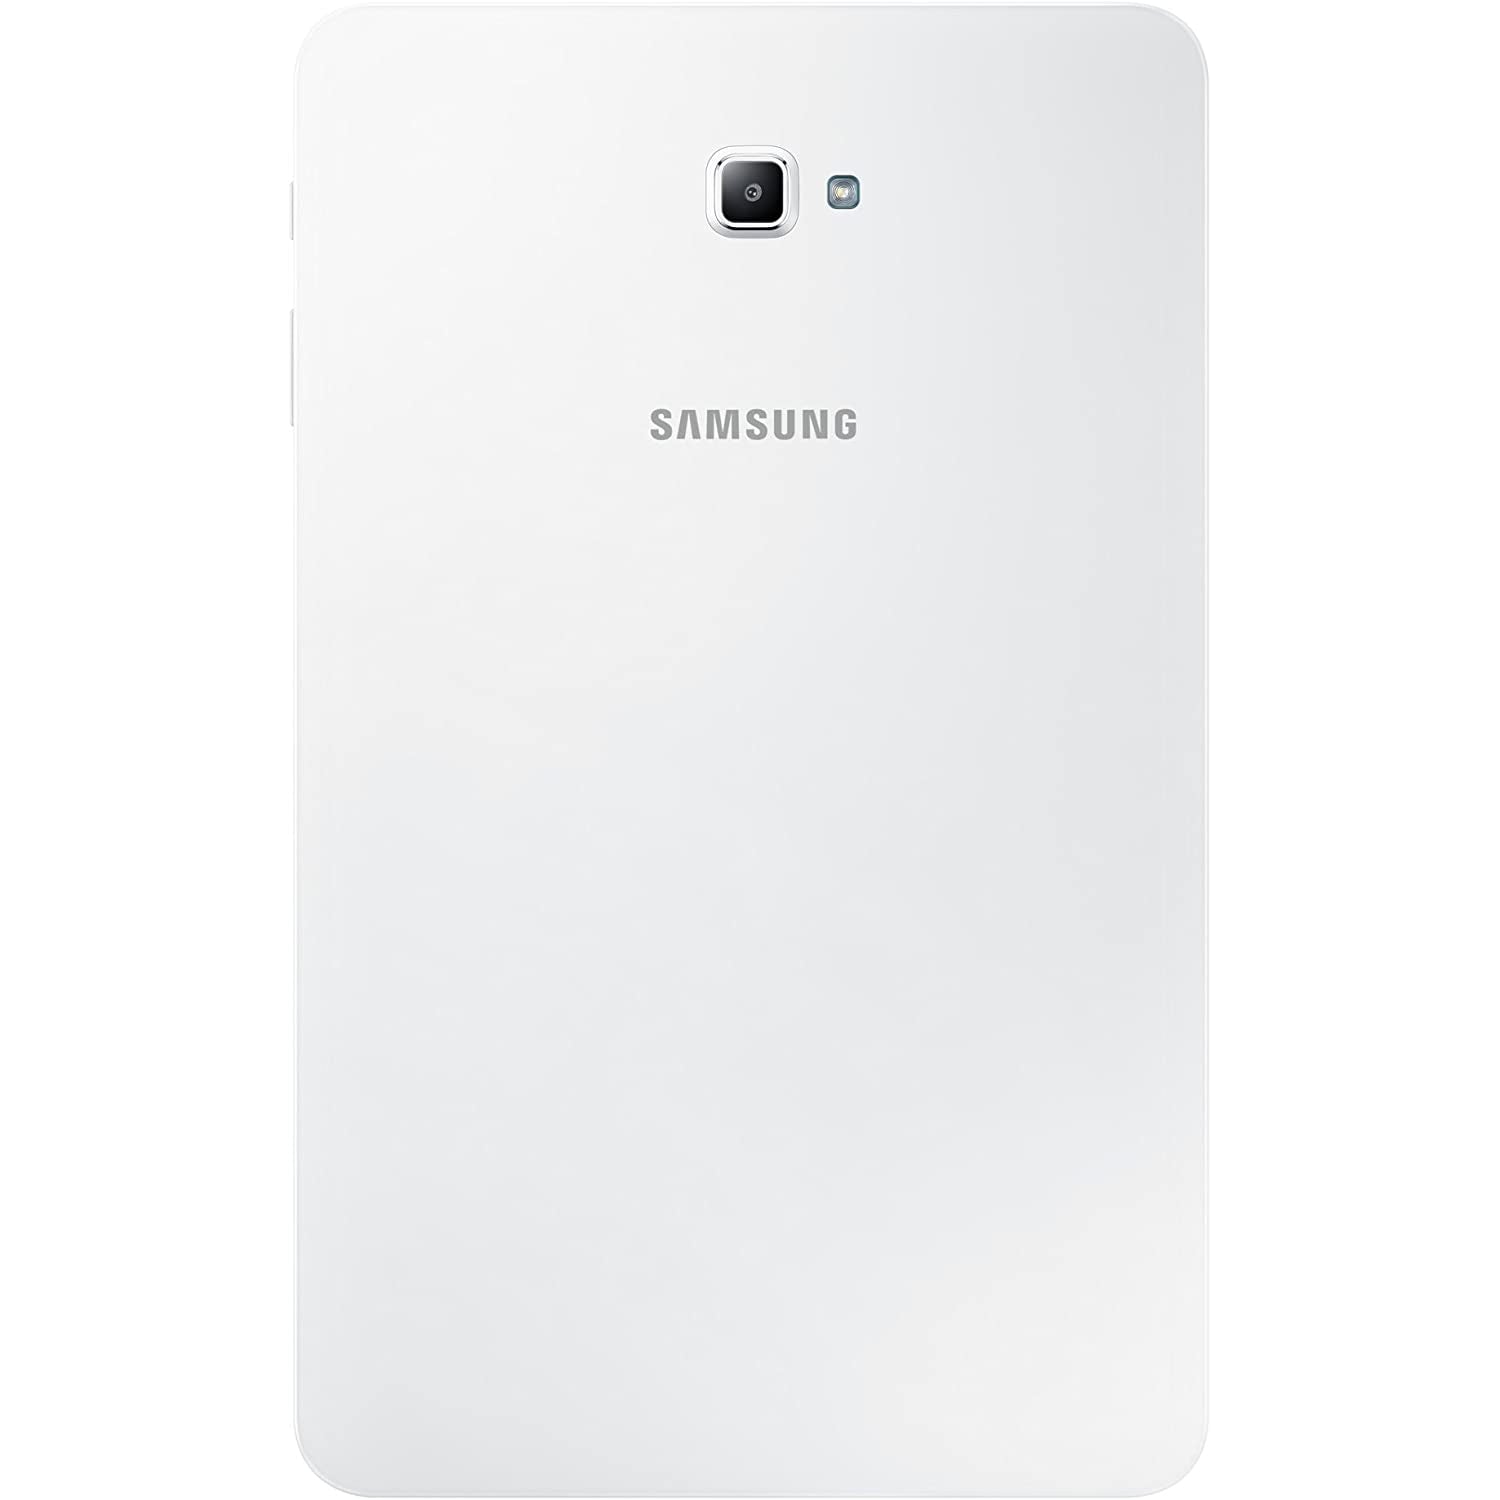 Samsung Galaxy Tab A 10.1, 16GB, White - Refurbished Excellent